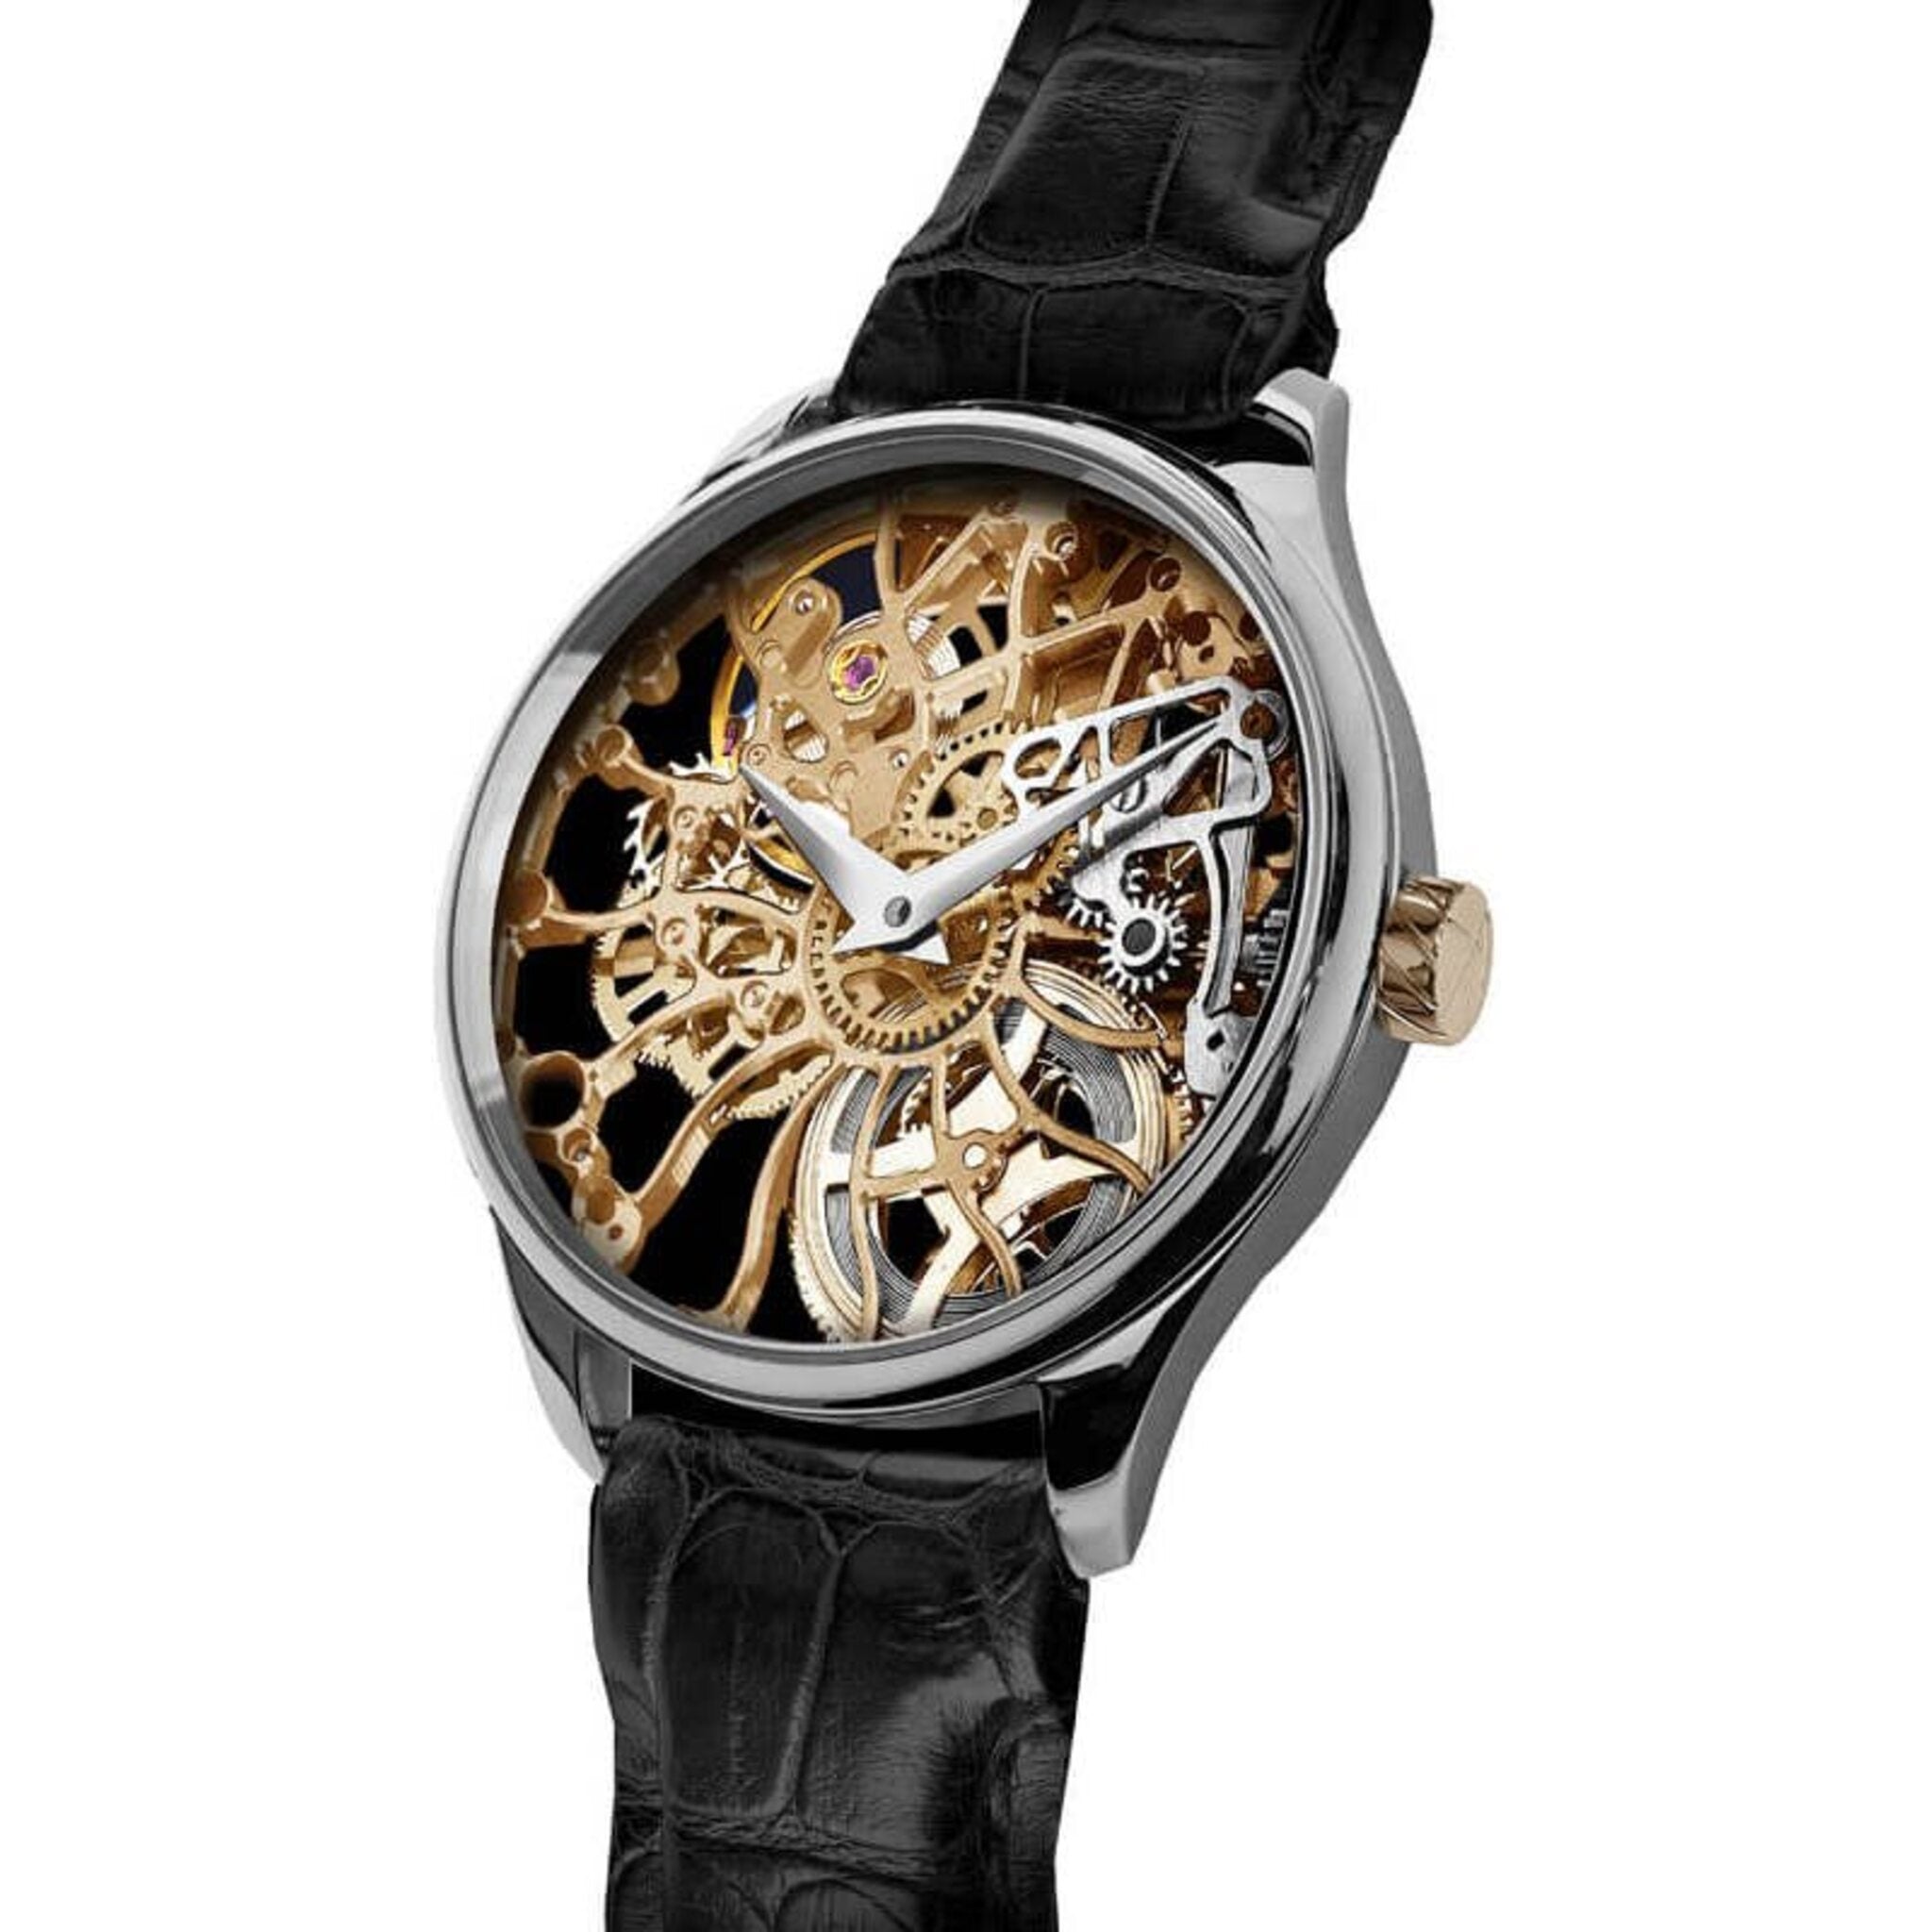 Artya Small Golden Shams Skeleton Limited Edition Watch